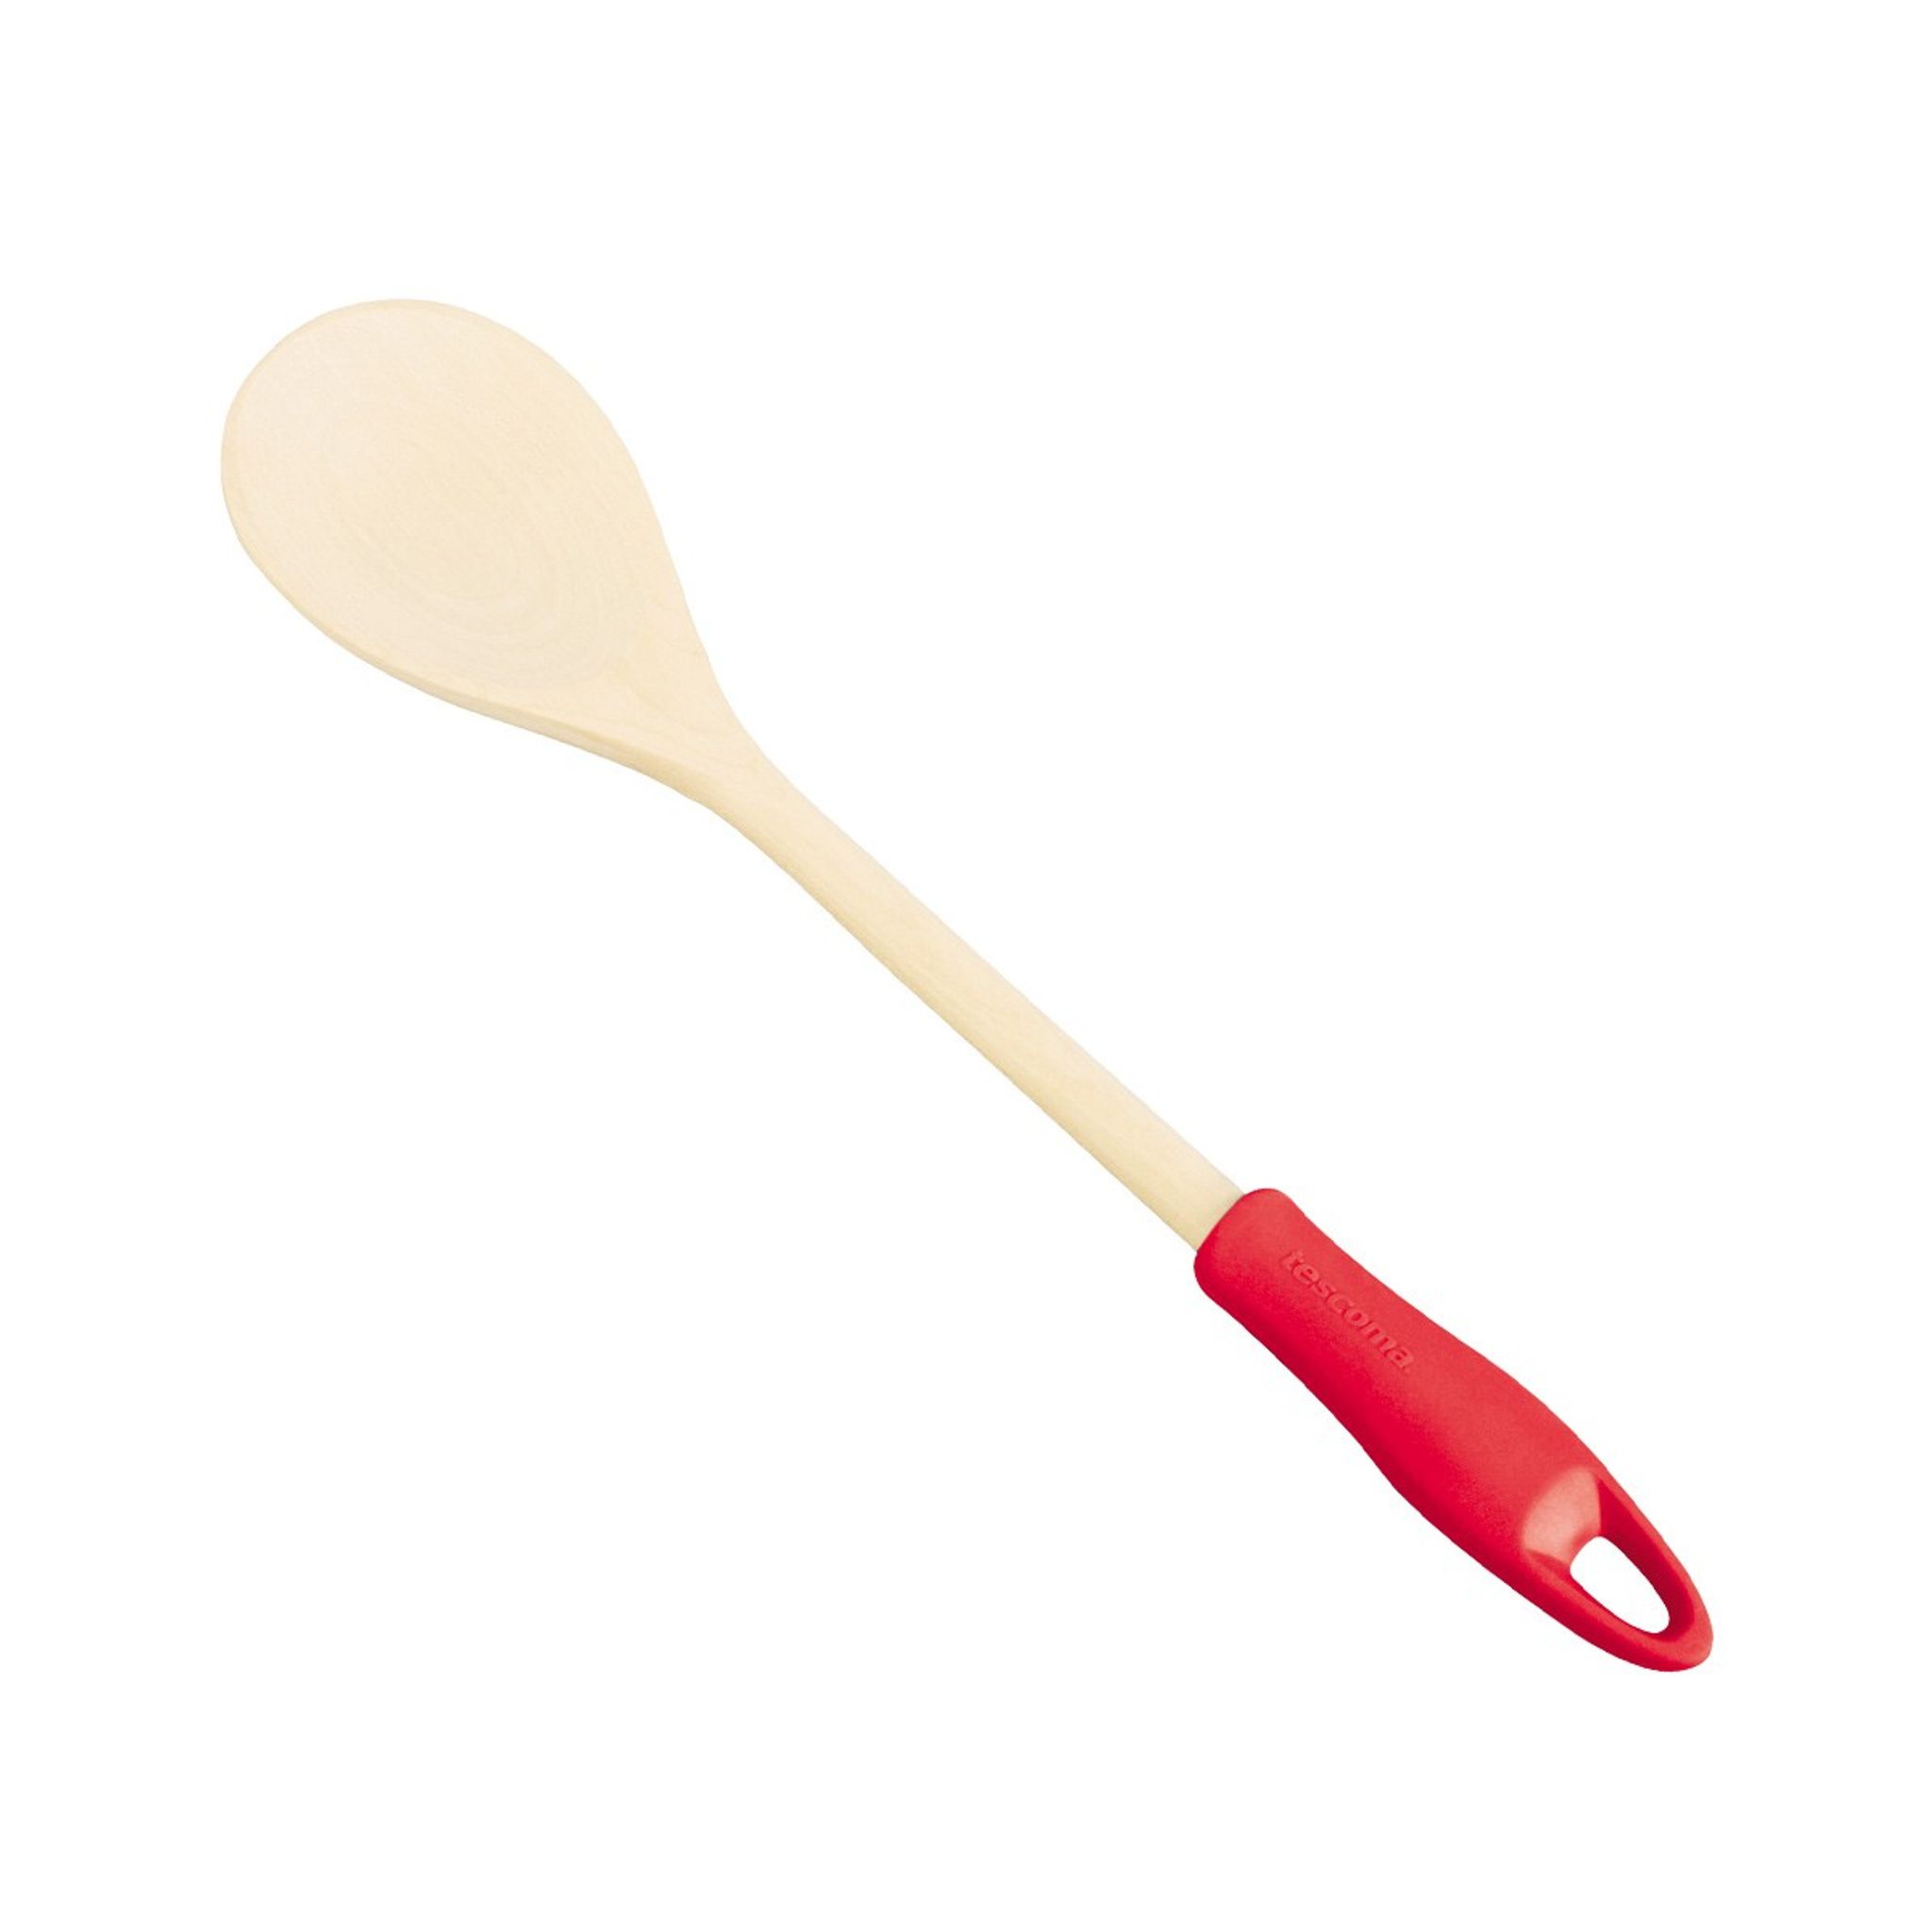 Oval stirring spoon PRESTO WOOD